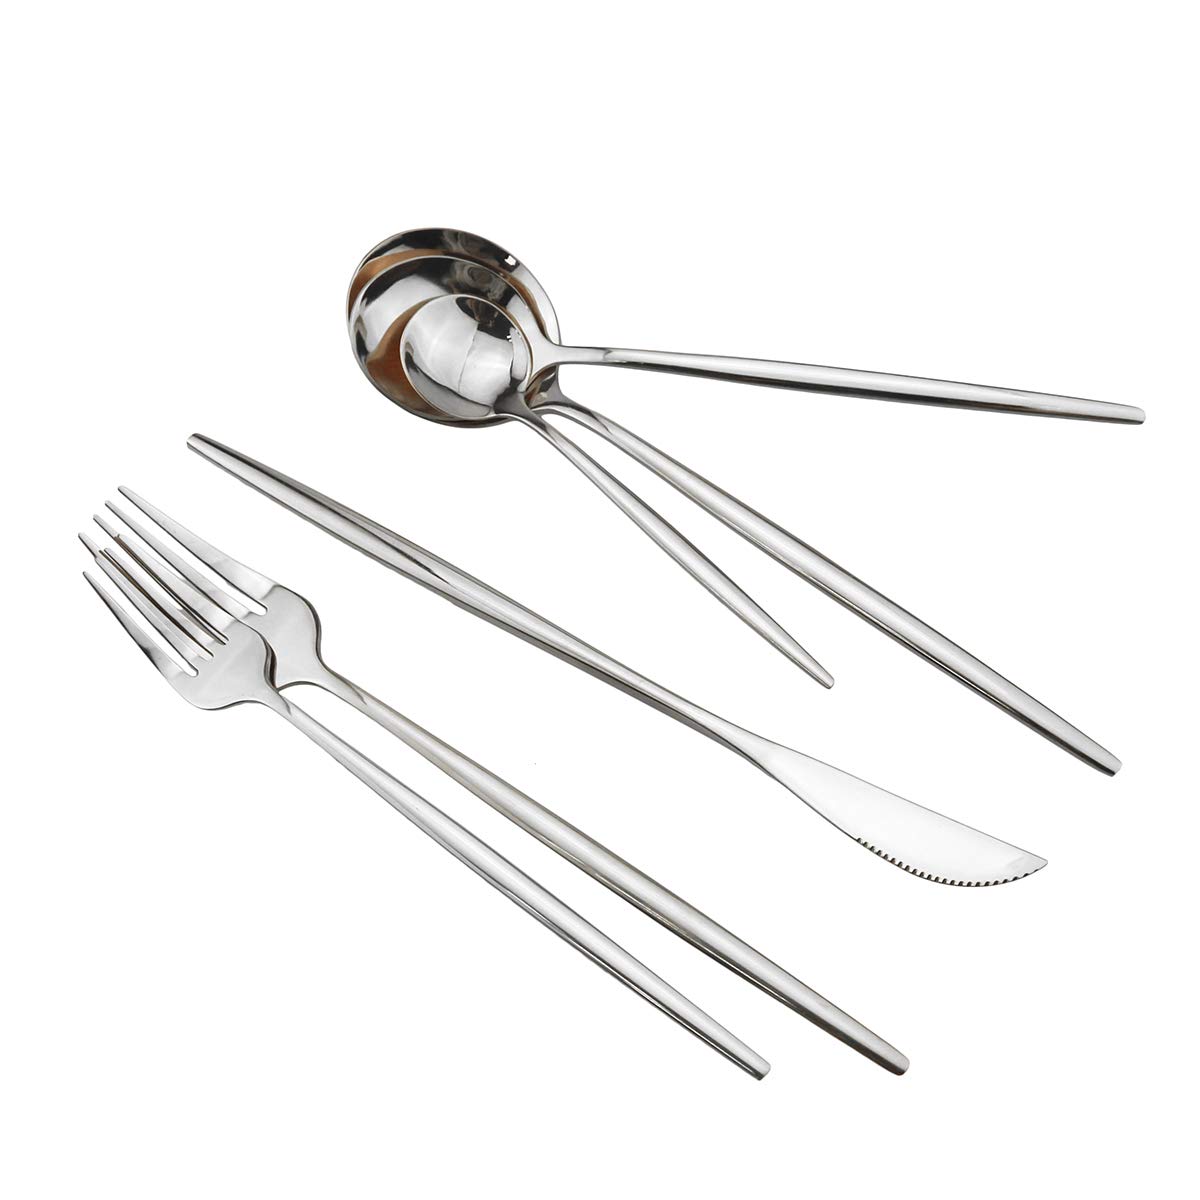 Gugrida 36-Piece Silverware Set – 304 Stainless Steel Silver Utensil Forks Spoons Knives Set, Mirror Polished Cutlery Flatware Set Tableware Sets for 6- Curved Design Dishwasher Safe (Silver)